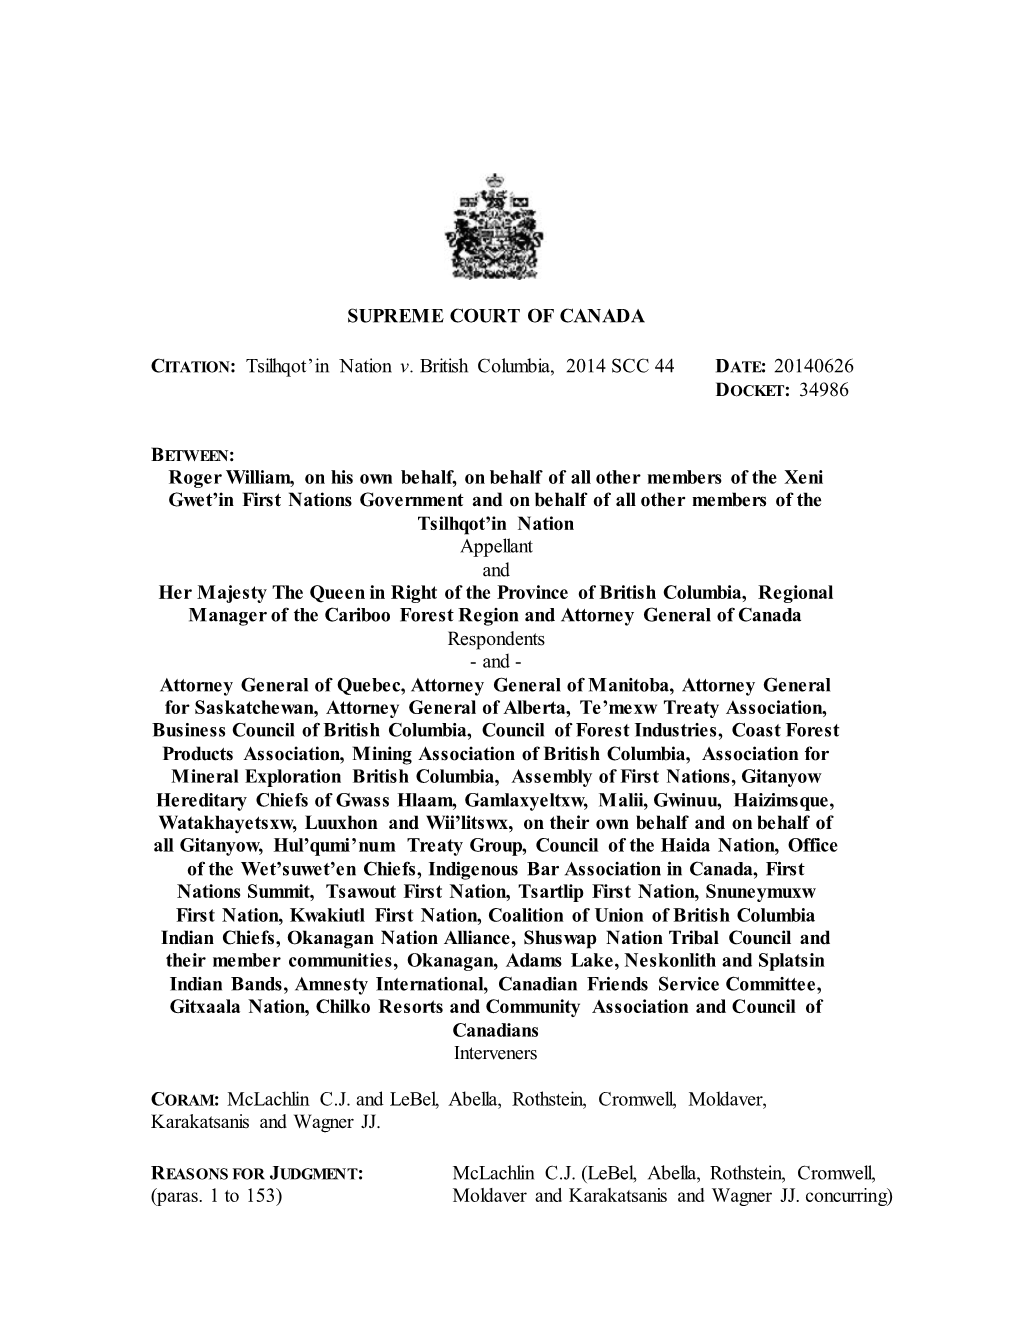 SUPREME COURT of CANADA CITATION: Tsilhqot'in Nation V